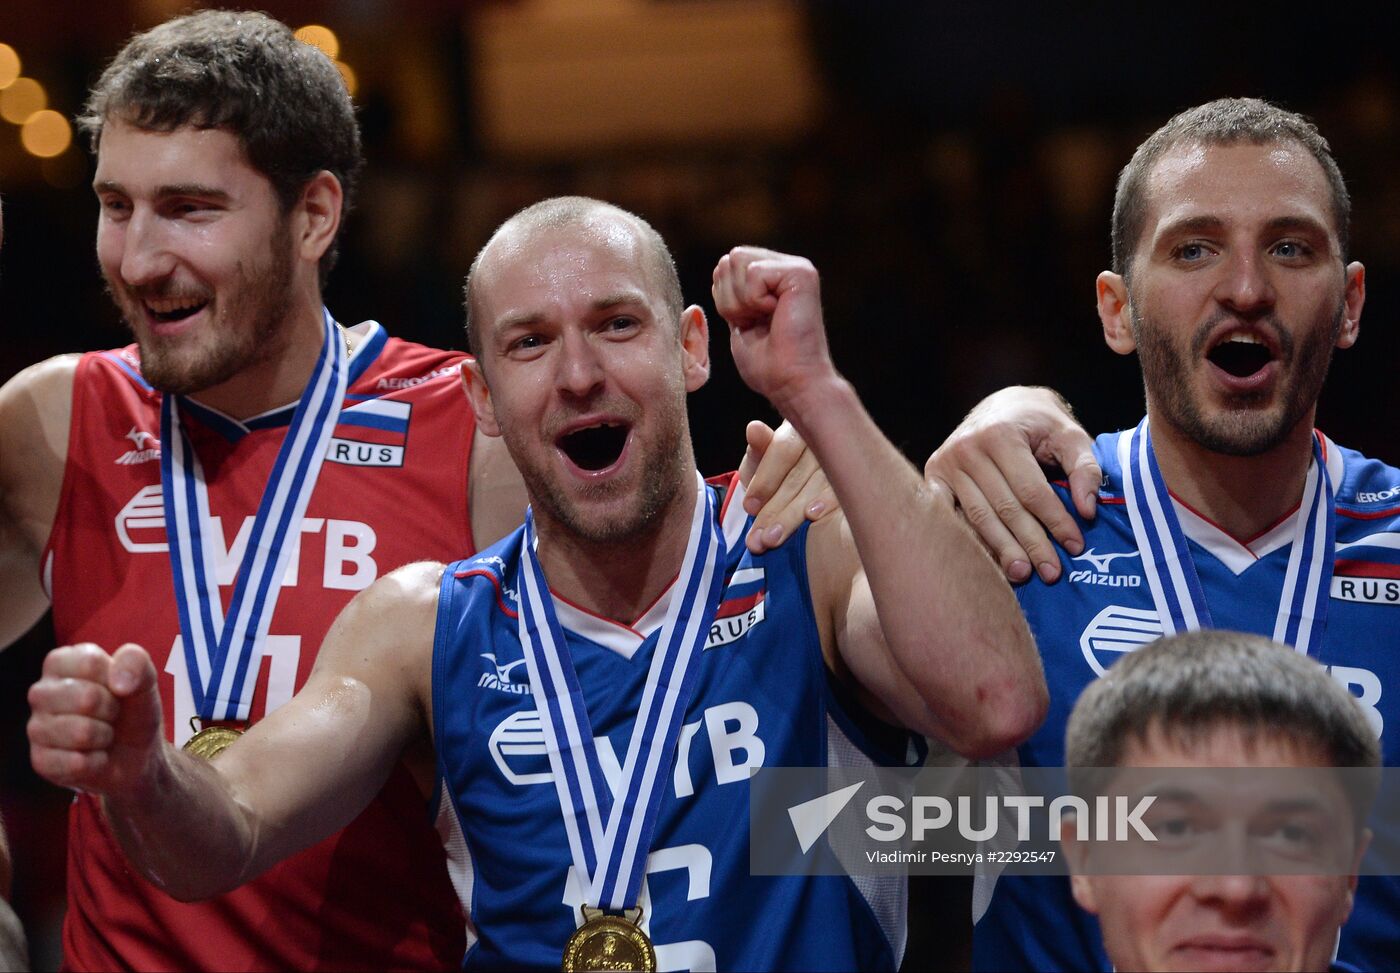 2013 Men's European Volleyball Championship. Finals